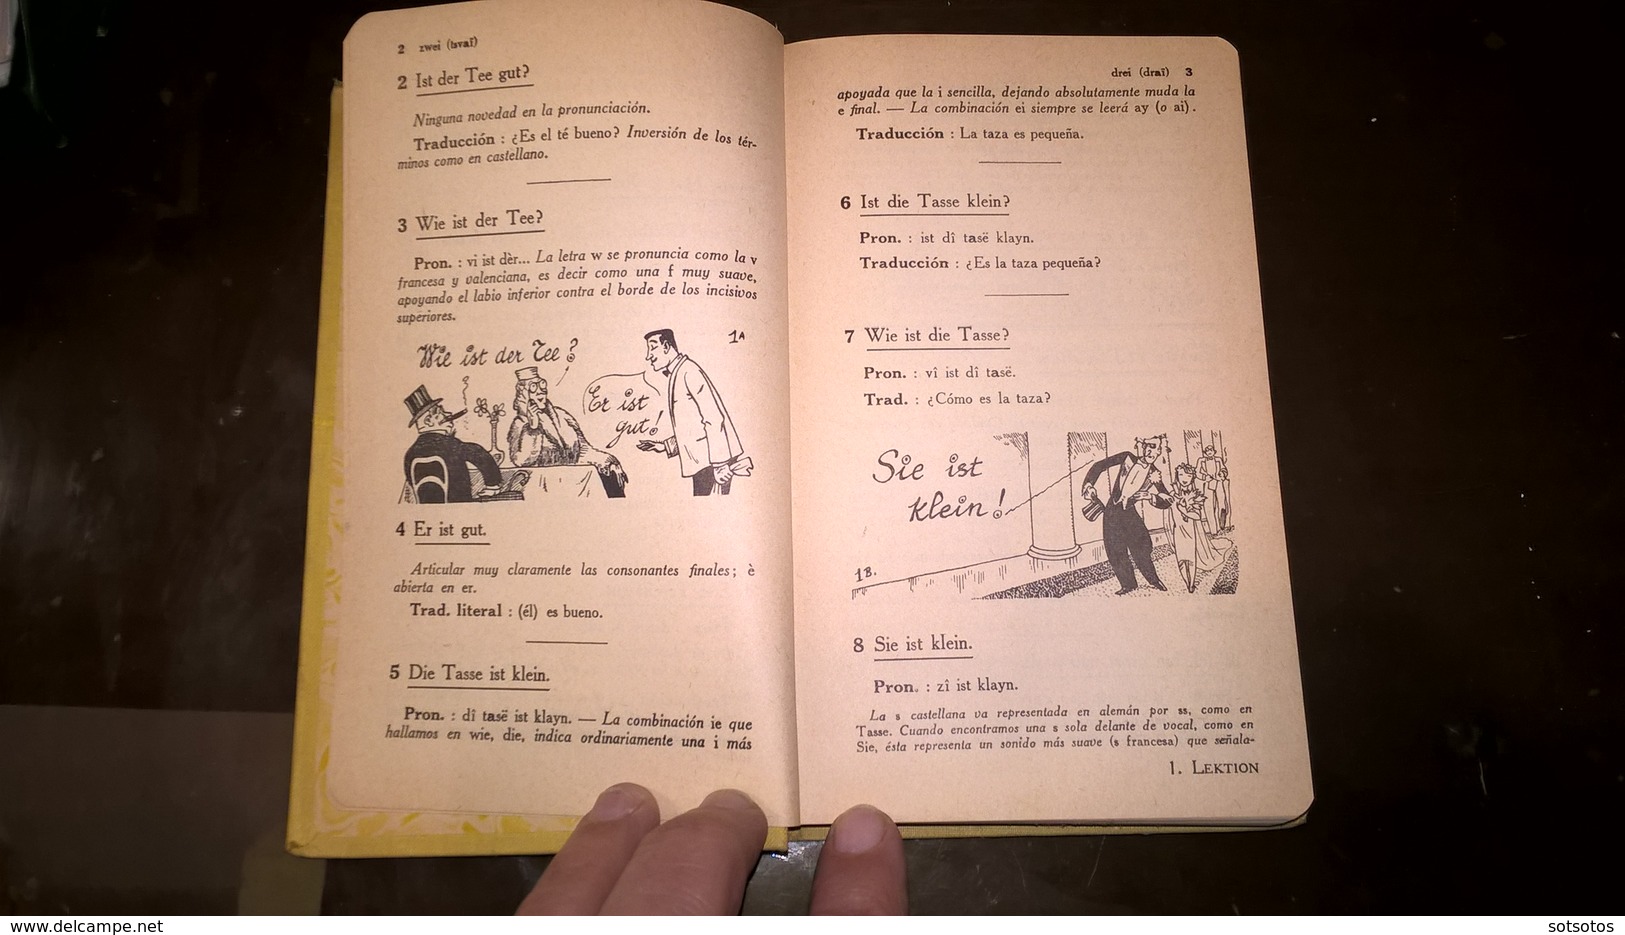 EL ALEMAN Sin ESFUERZO Por A. CHEREL - METODO DIARIO ASSIMIL - PARIS (1959) - 376 Pages (11,50x18 Cent) - IN VERY GOOD - Ouvrages Linguistiques